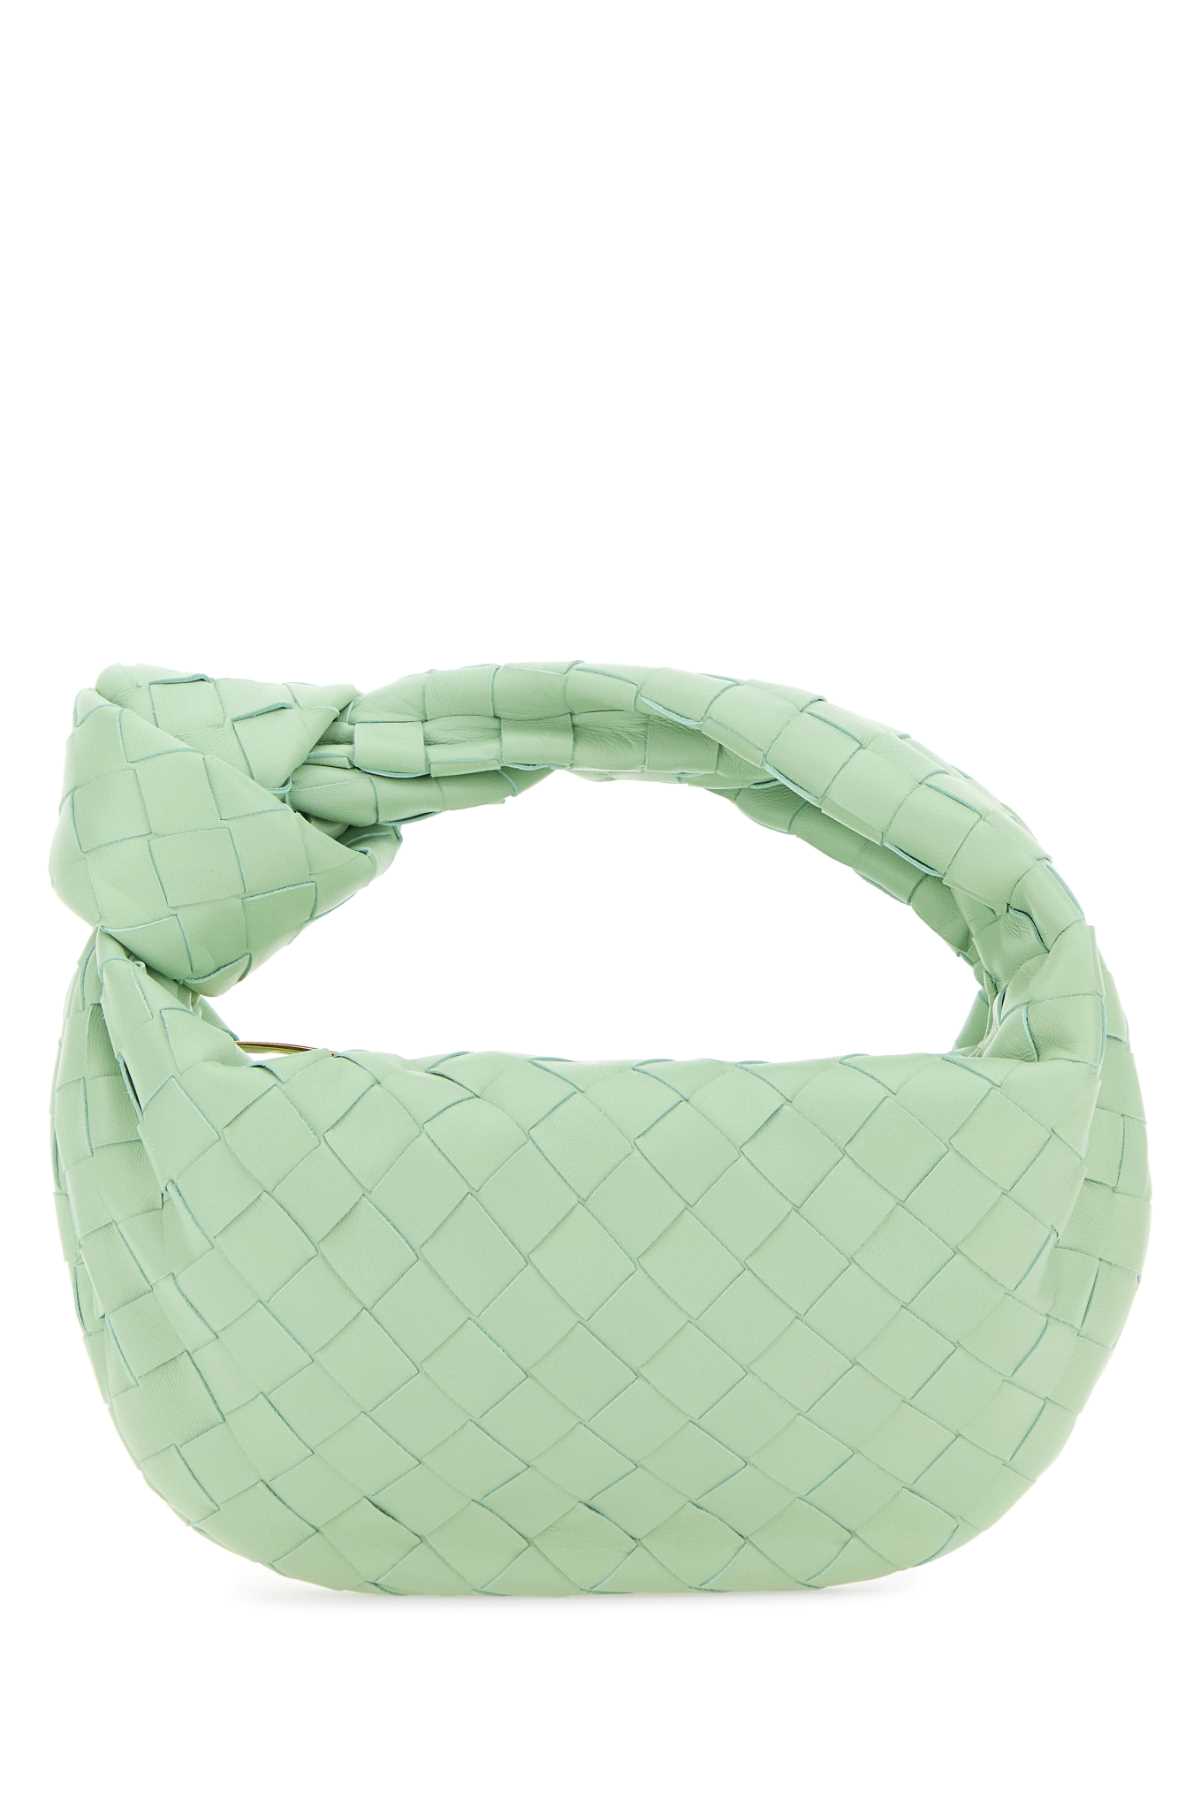 Shop Bottega Veneta Mint Green Nappa Leather Mini Jodie Handbag